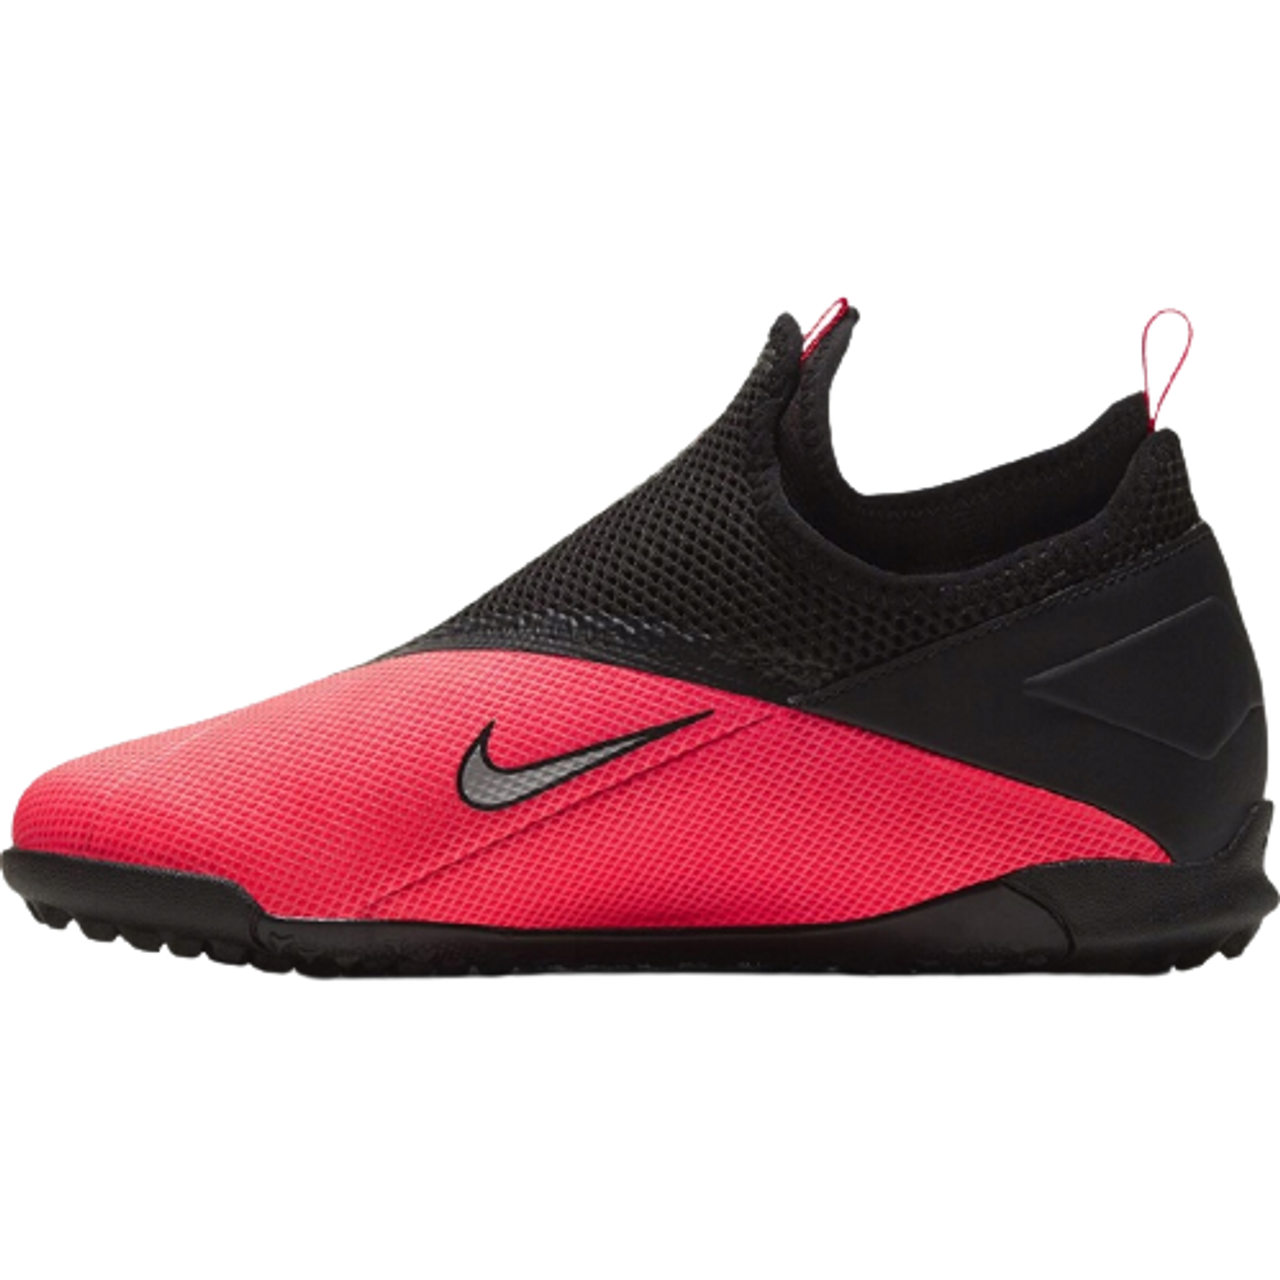 Nike Phantom VSN 2 Academy DF Cleat - Pink/Black